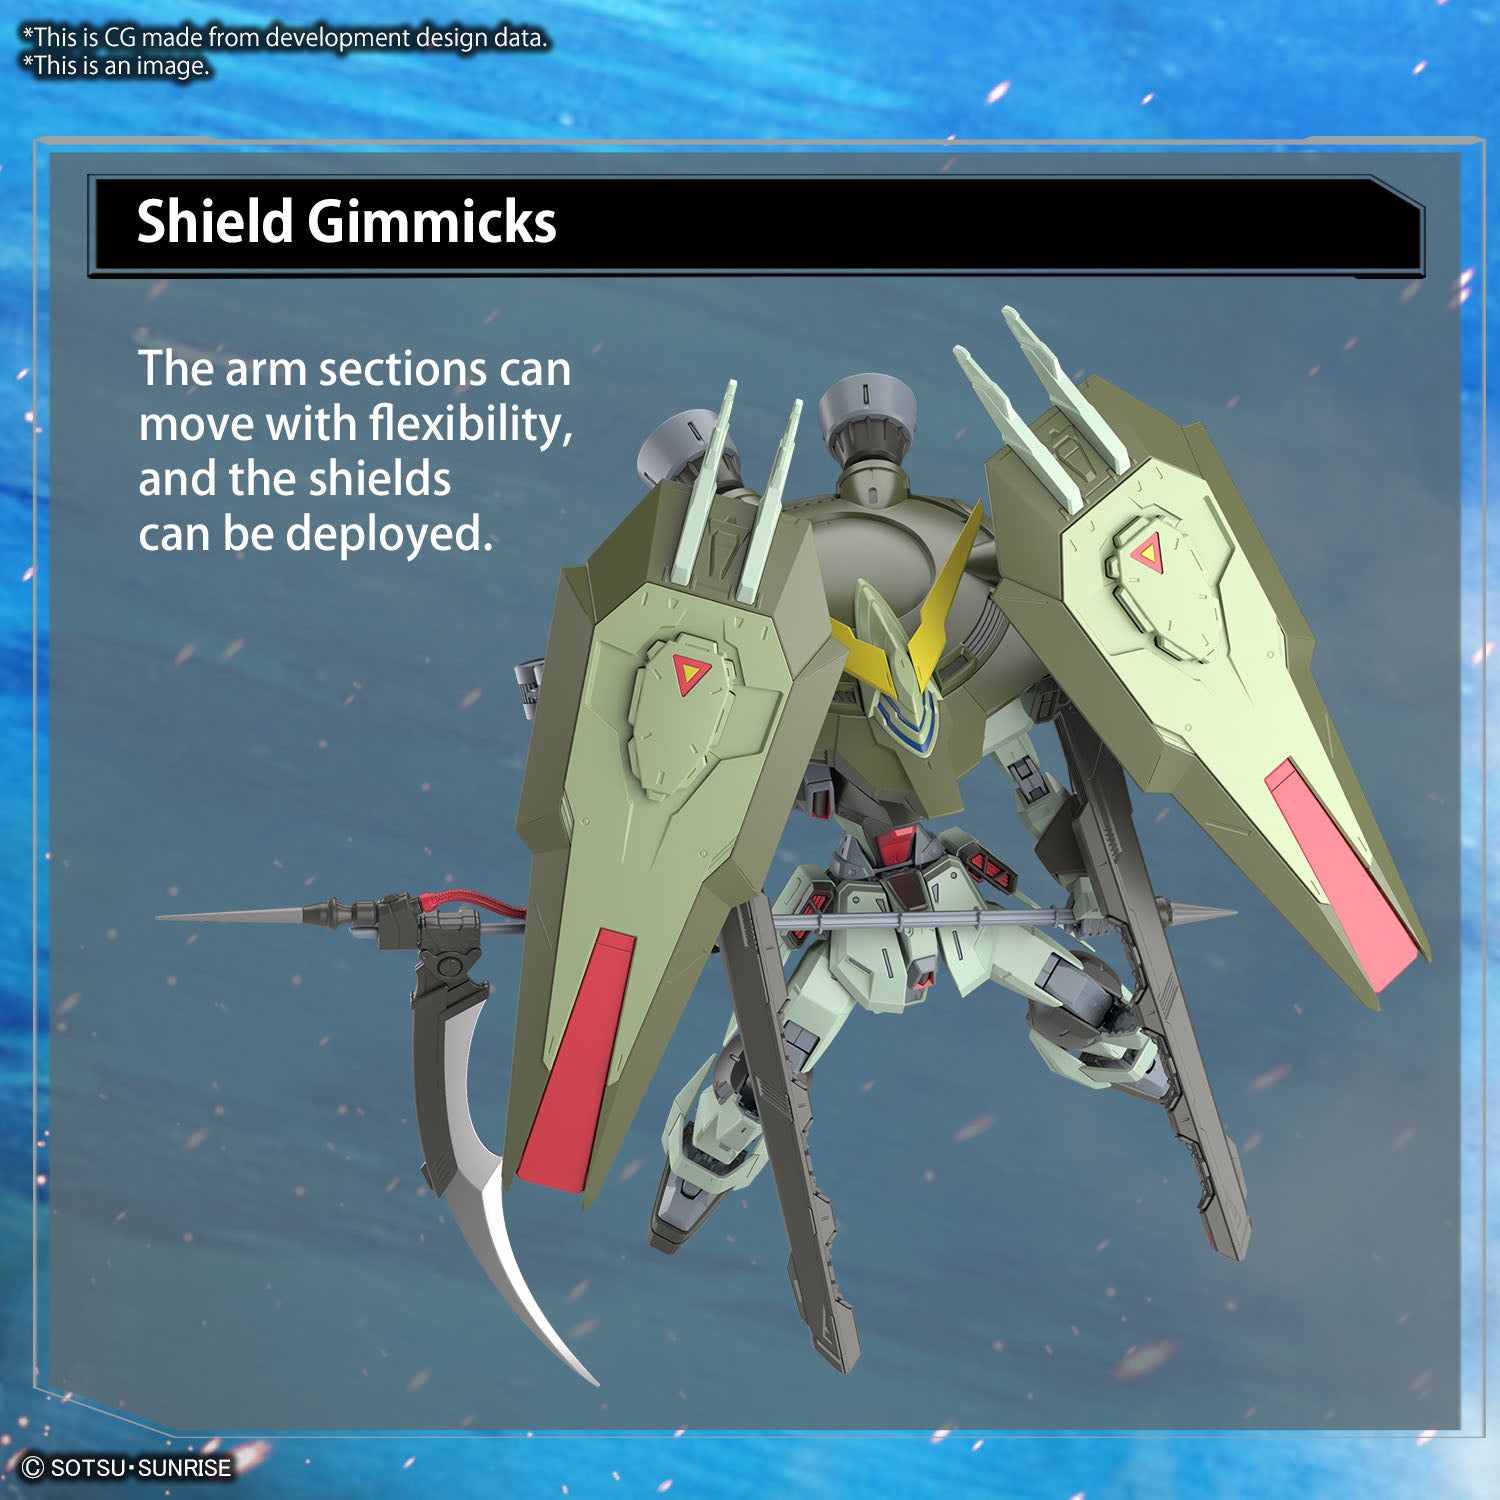 Pre-Order Full Mechanics Forbidden Gundam